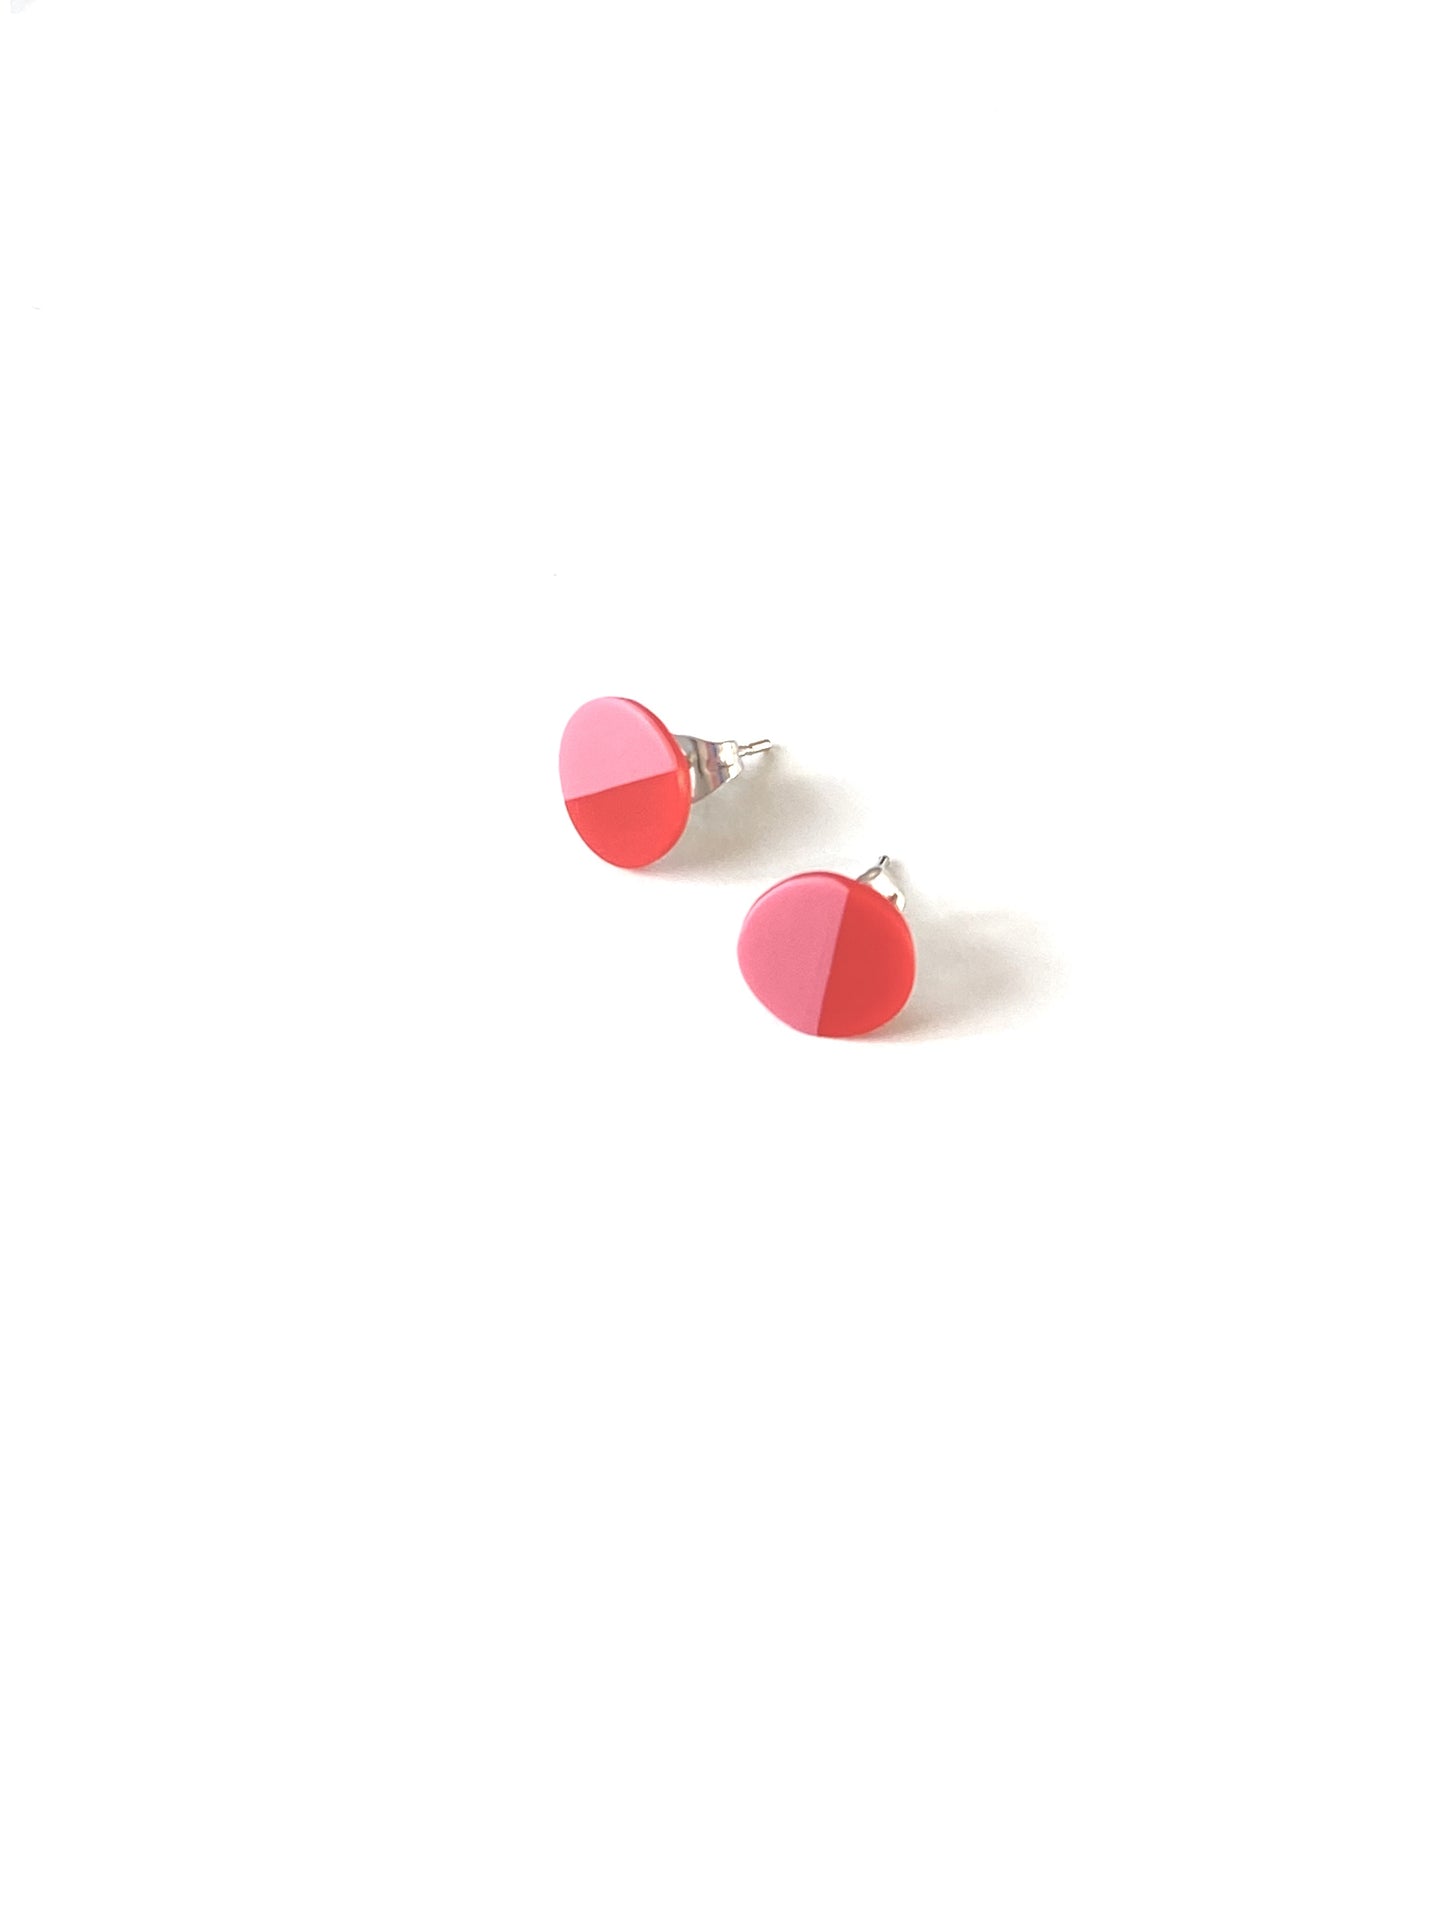 Petite Studs - Half & Half Pink / Red